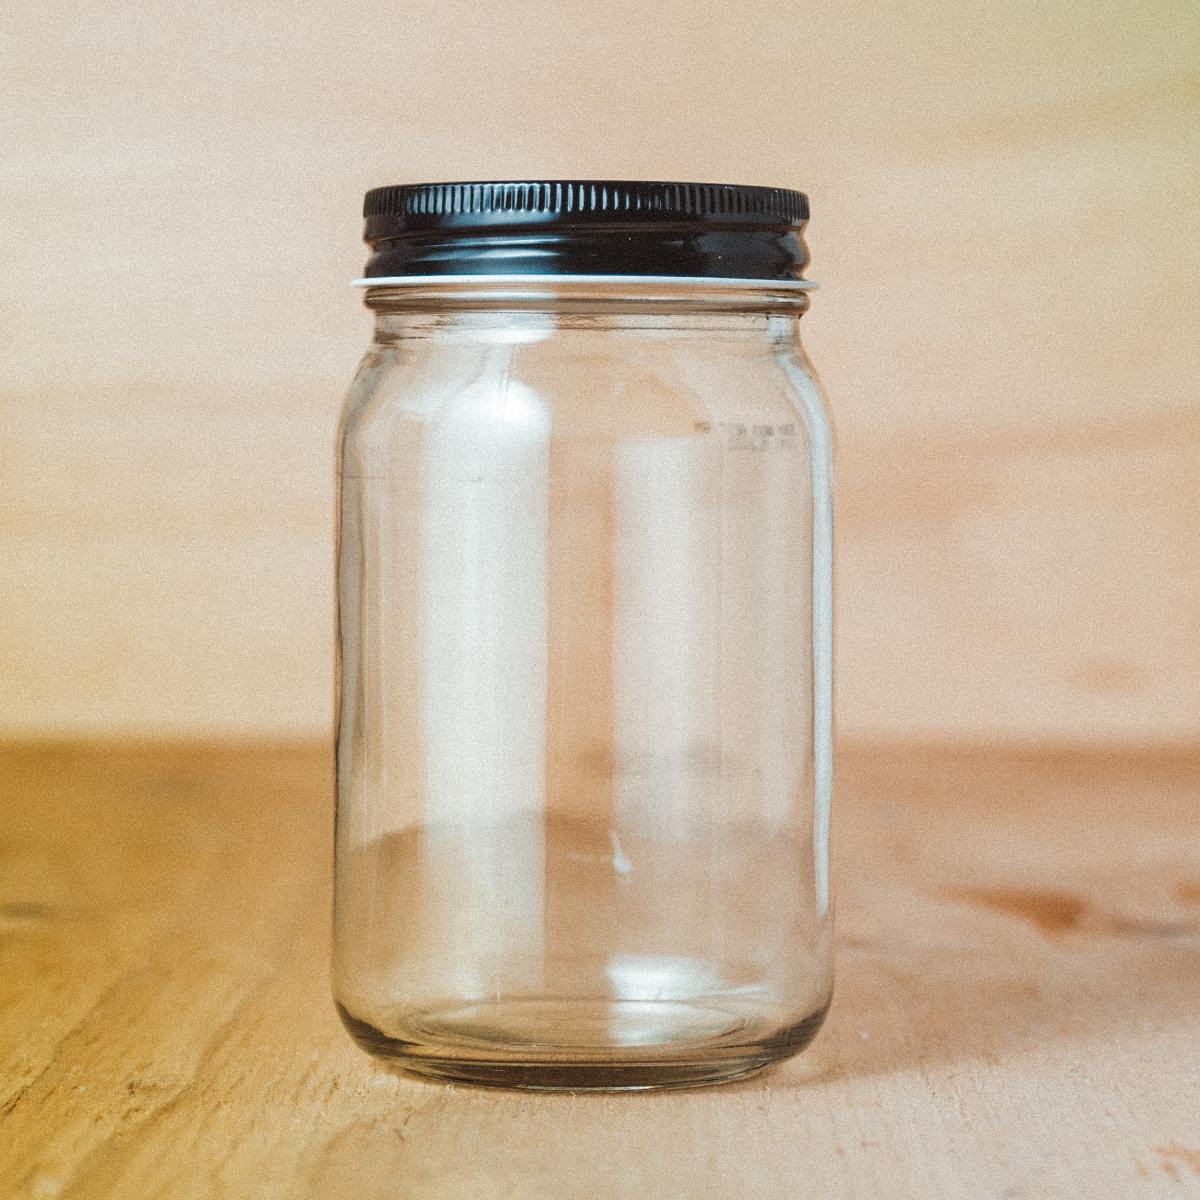 This empty jar symbolizes a part of this album's title. 